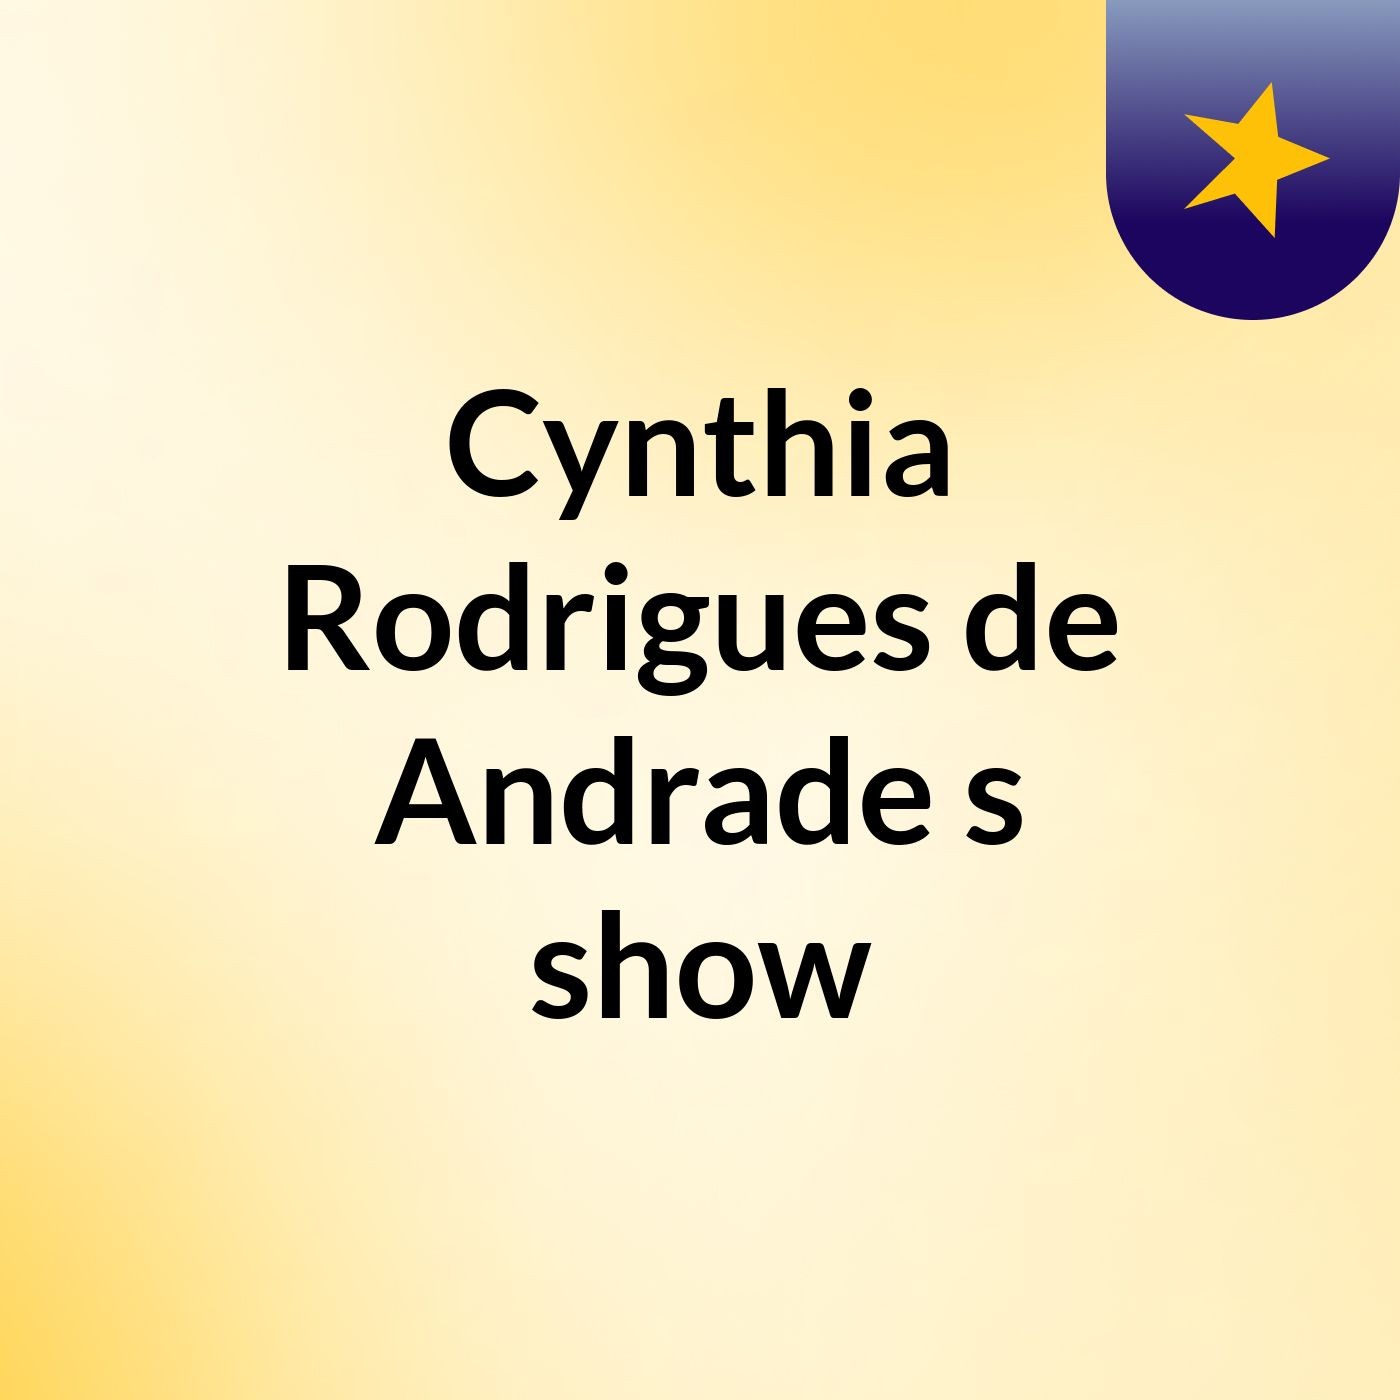 Cynthia Rodrigues de Andrade's show